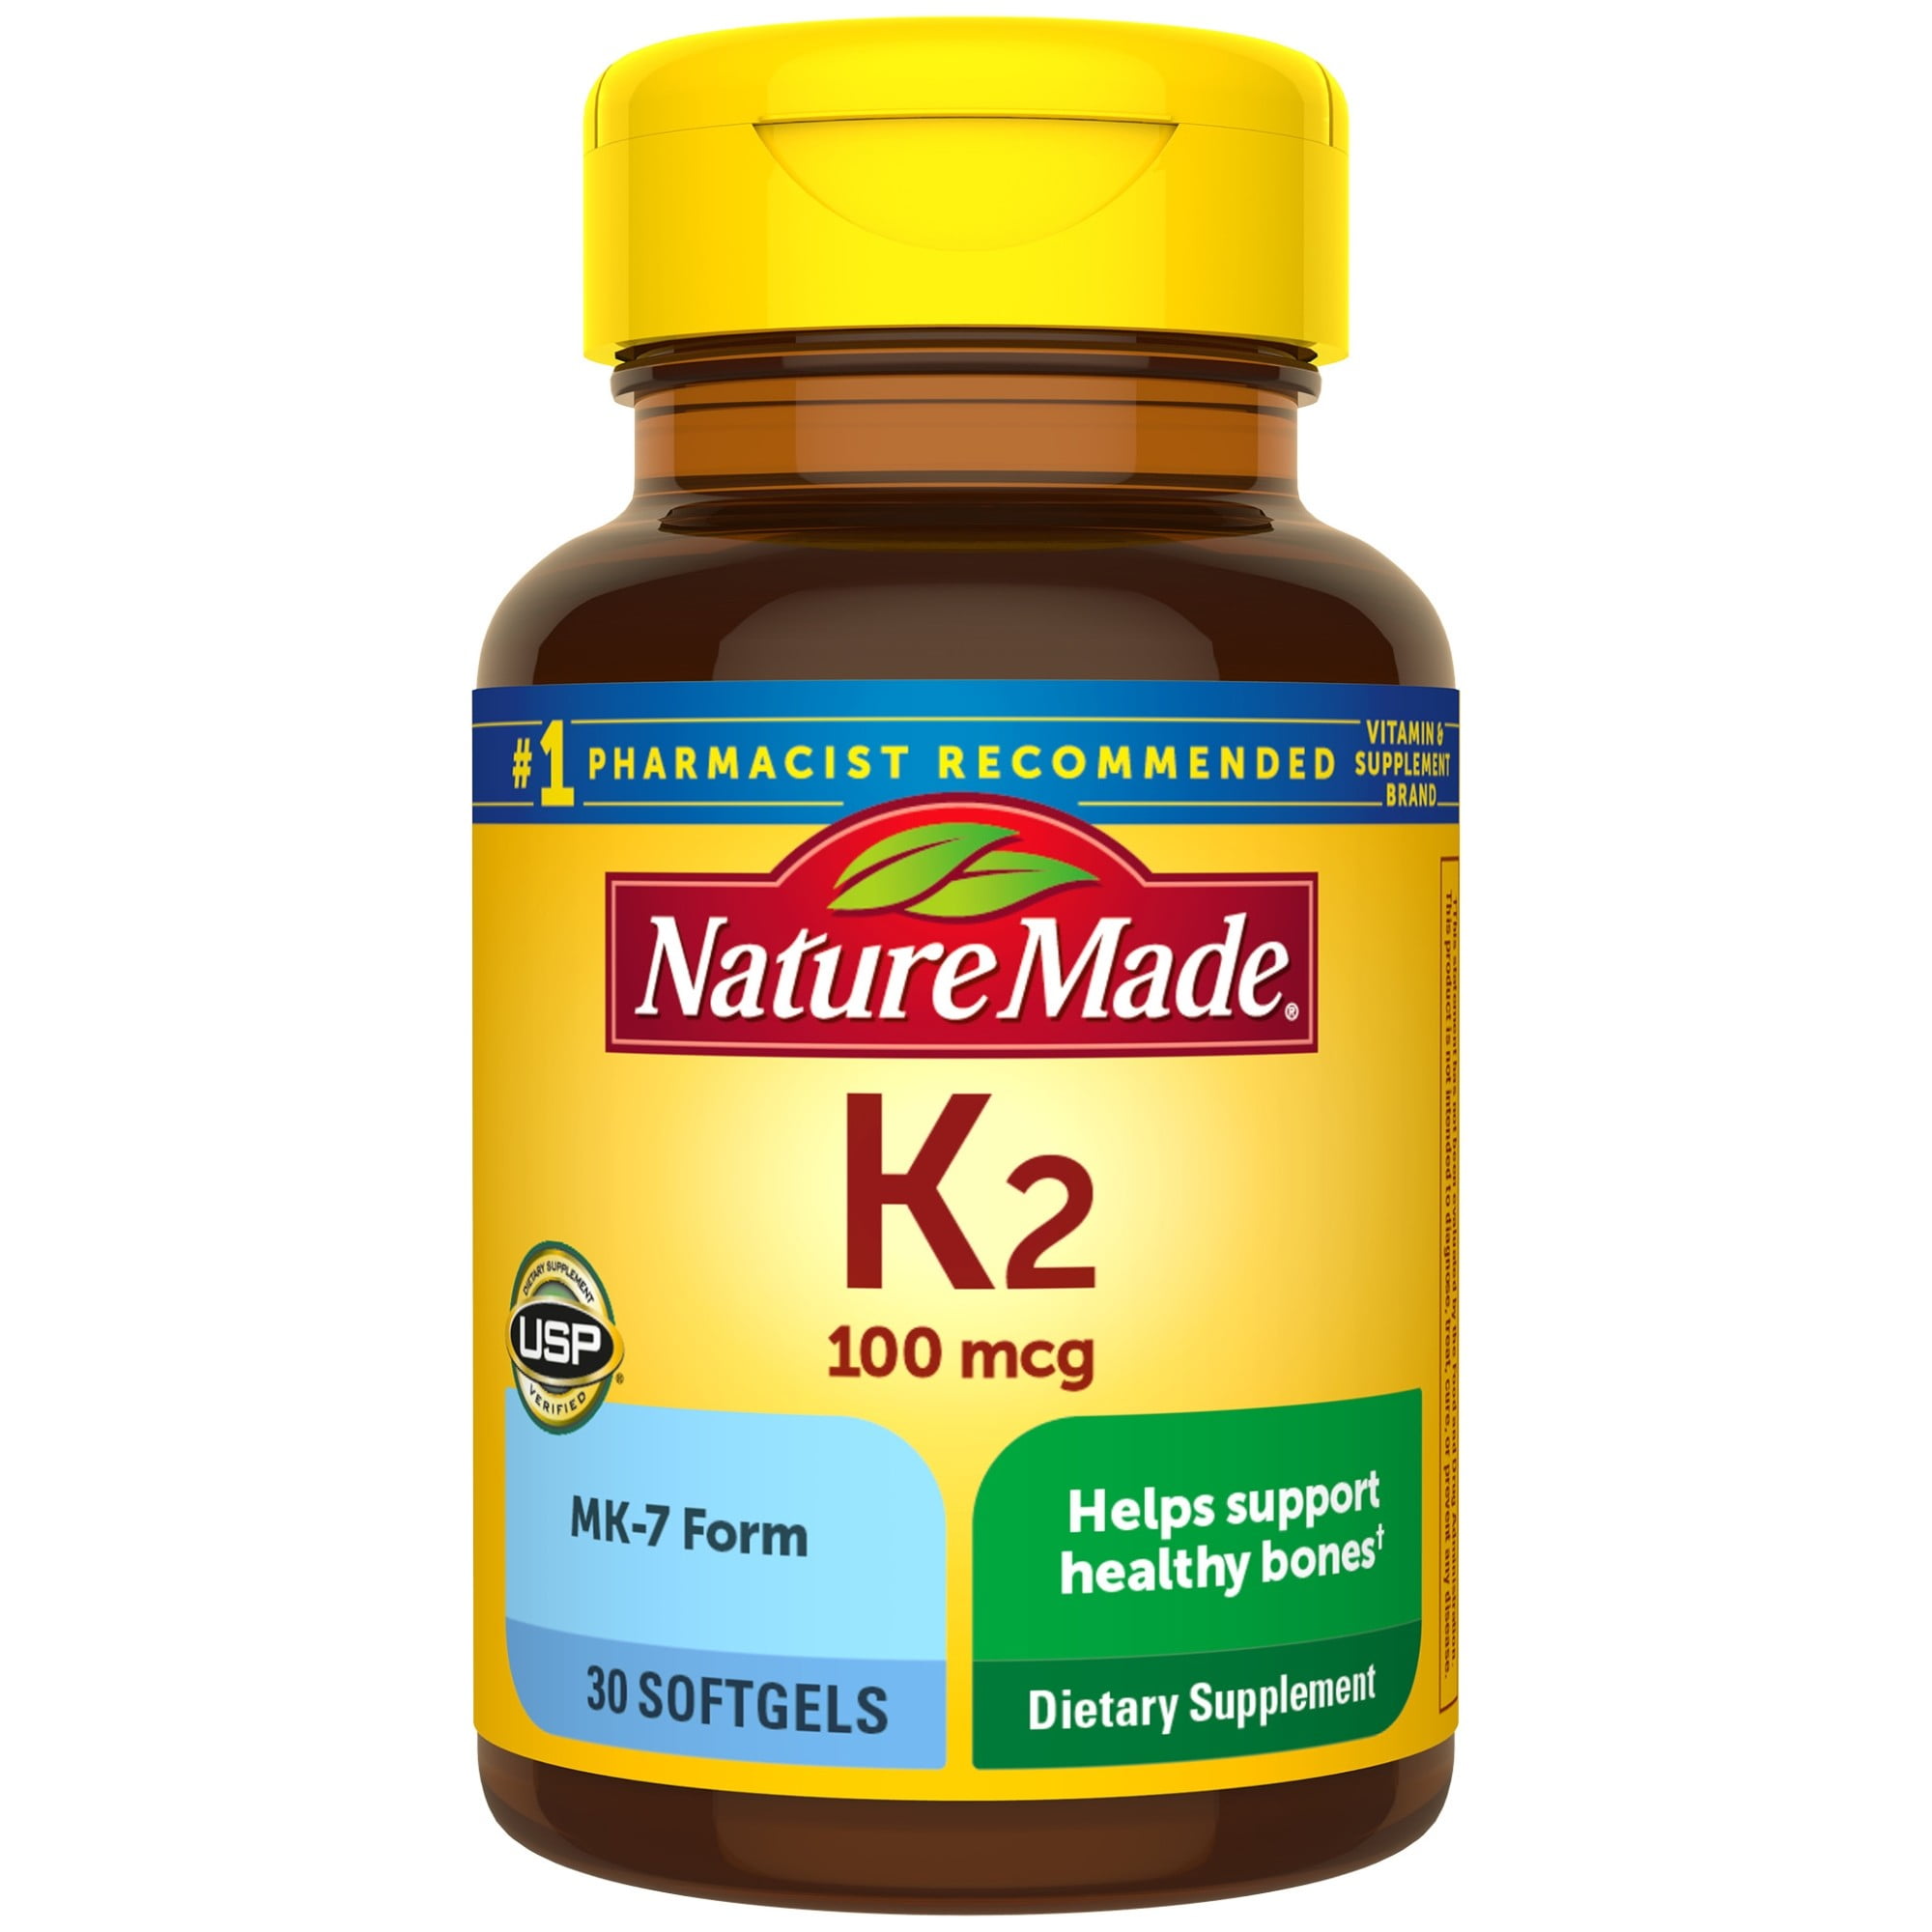 Nature Made Vitamin K2 100 mcg Softgels, 30 Count for Bone ...